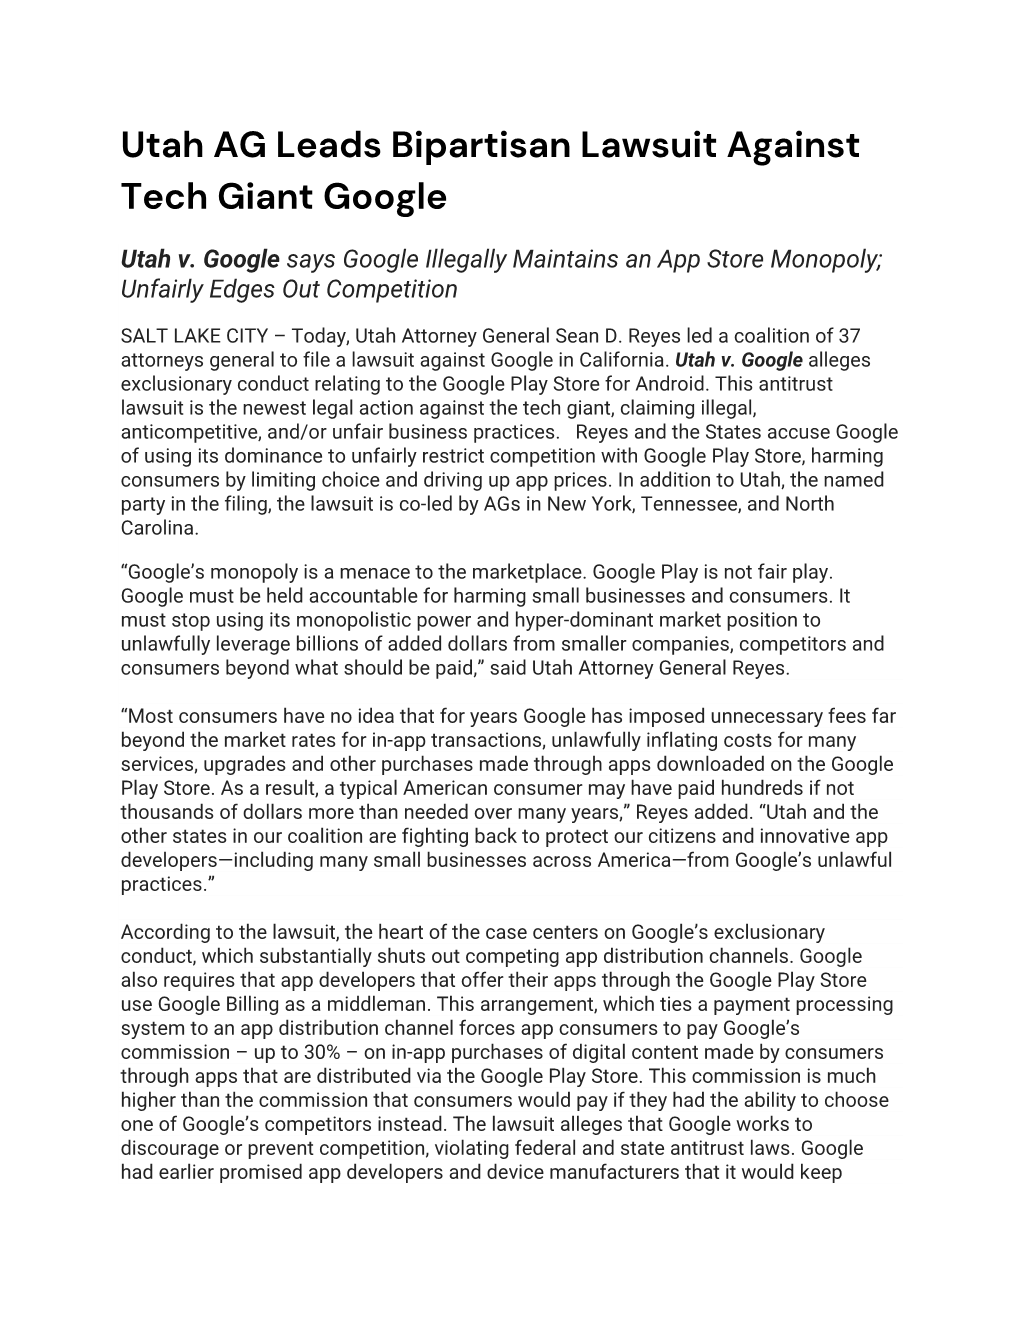 Utah AG Leads Bipartisan Lawsuit Against Tech Giant Google